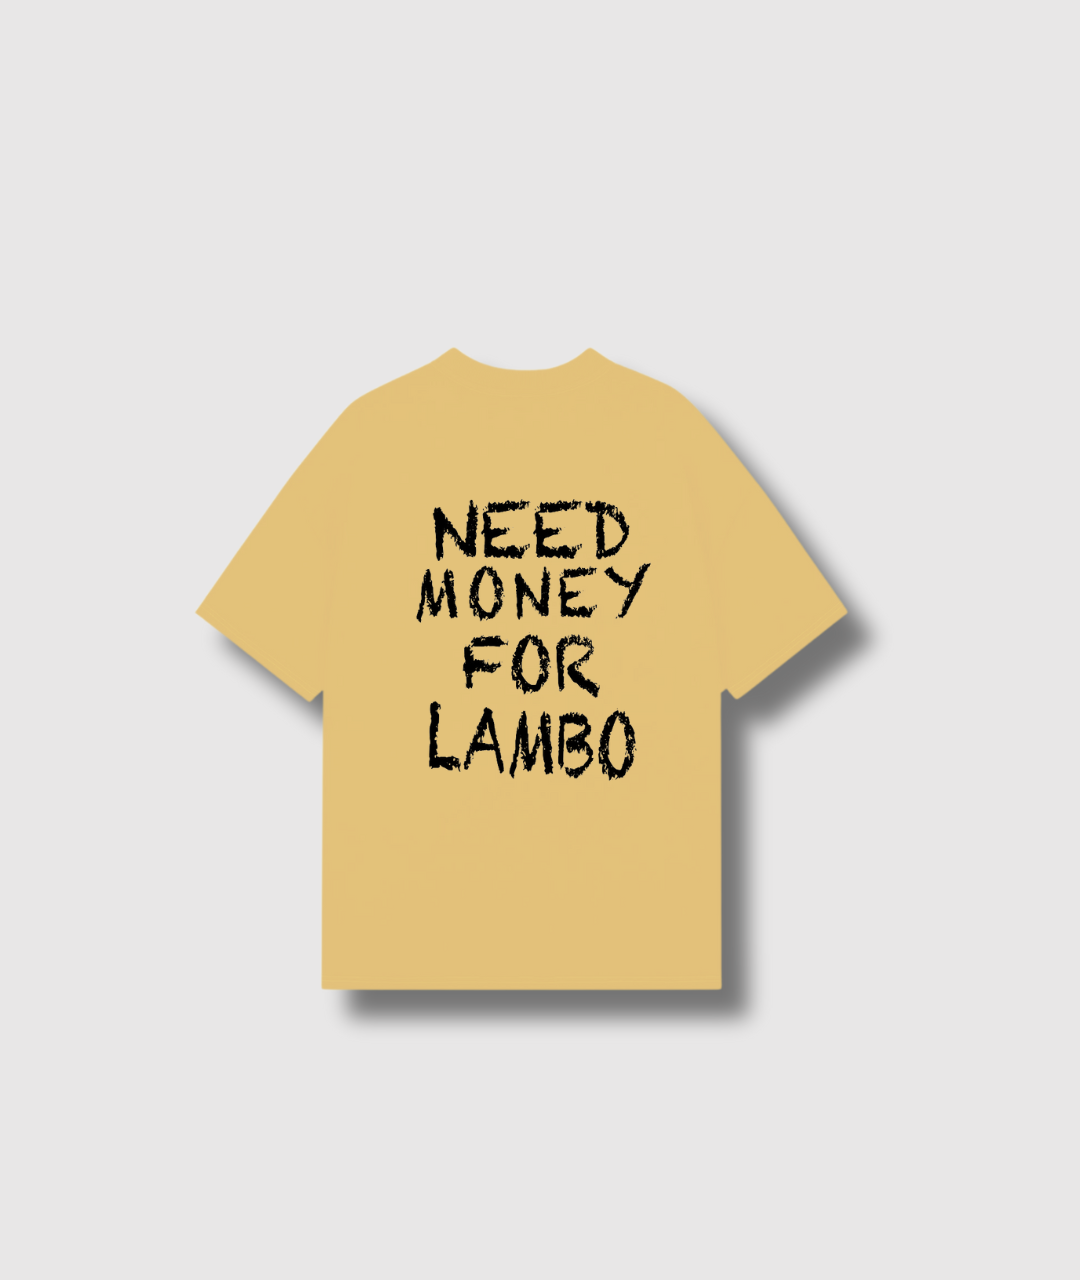 Need Money For Lambo Tee